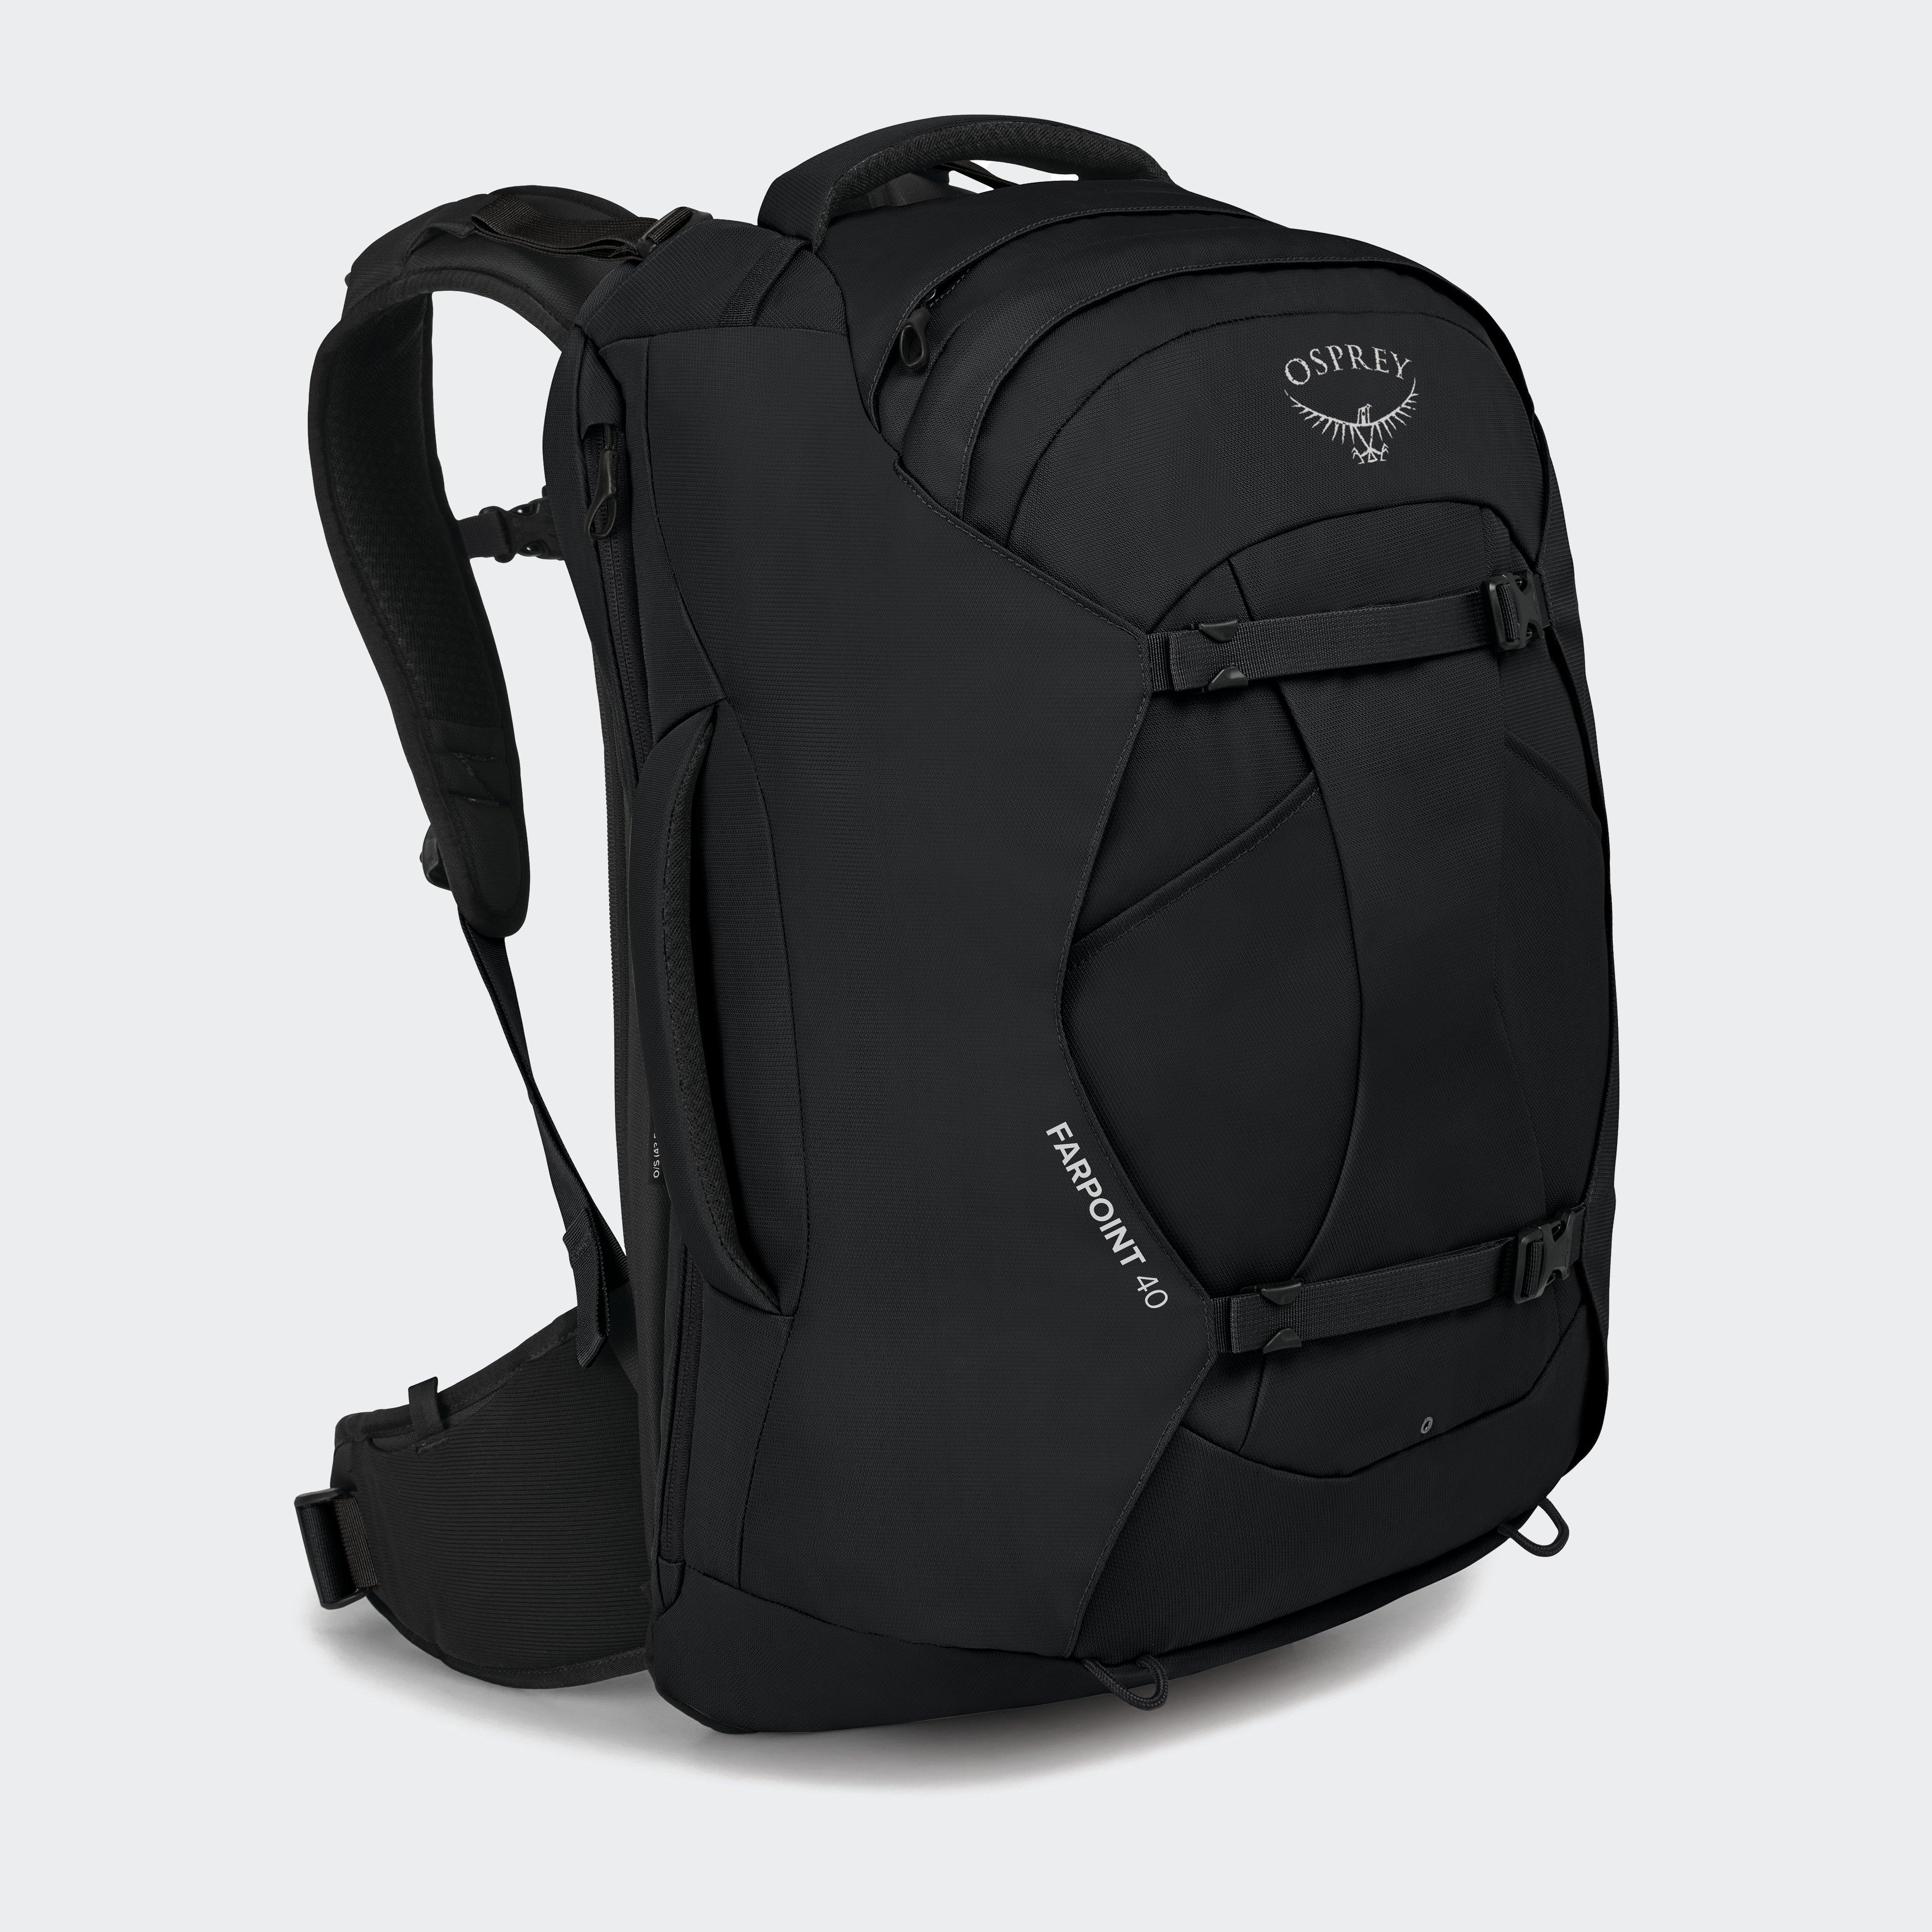 Schleich Farpoint 40l Travel Backpack - Black/black  Black/black